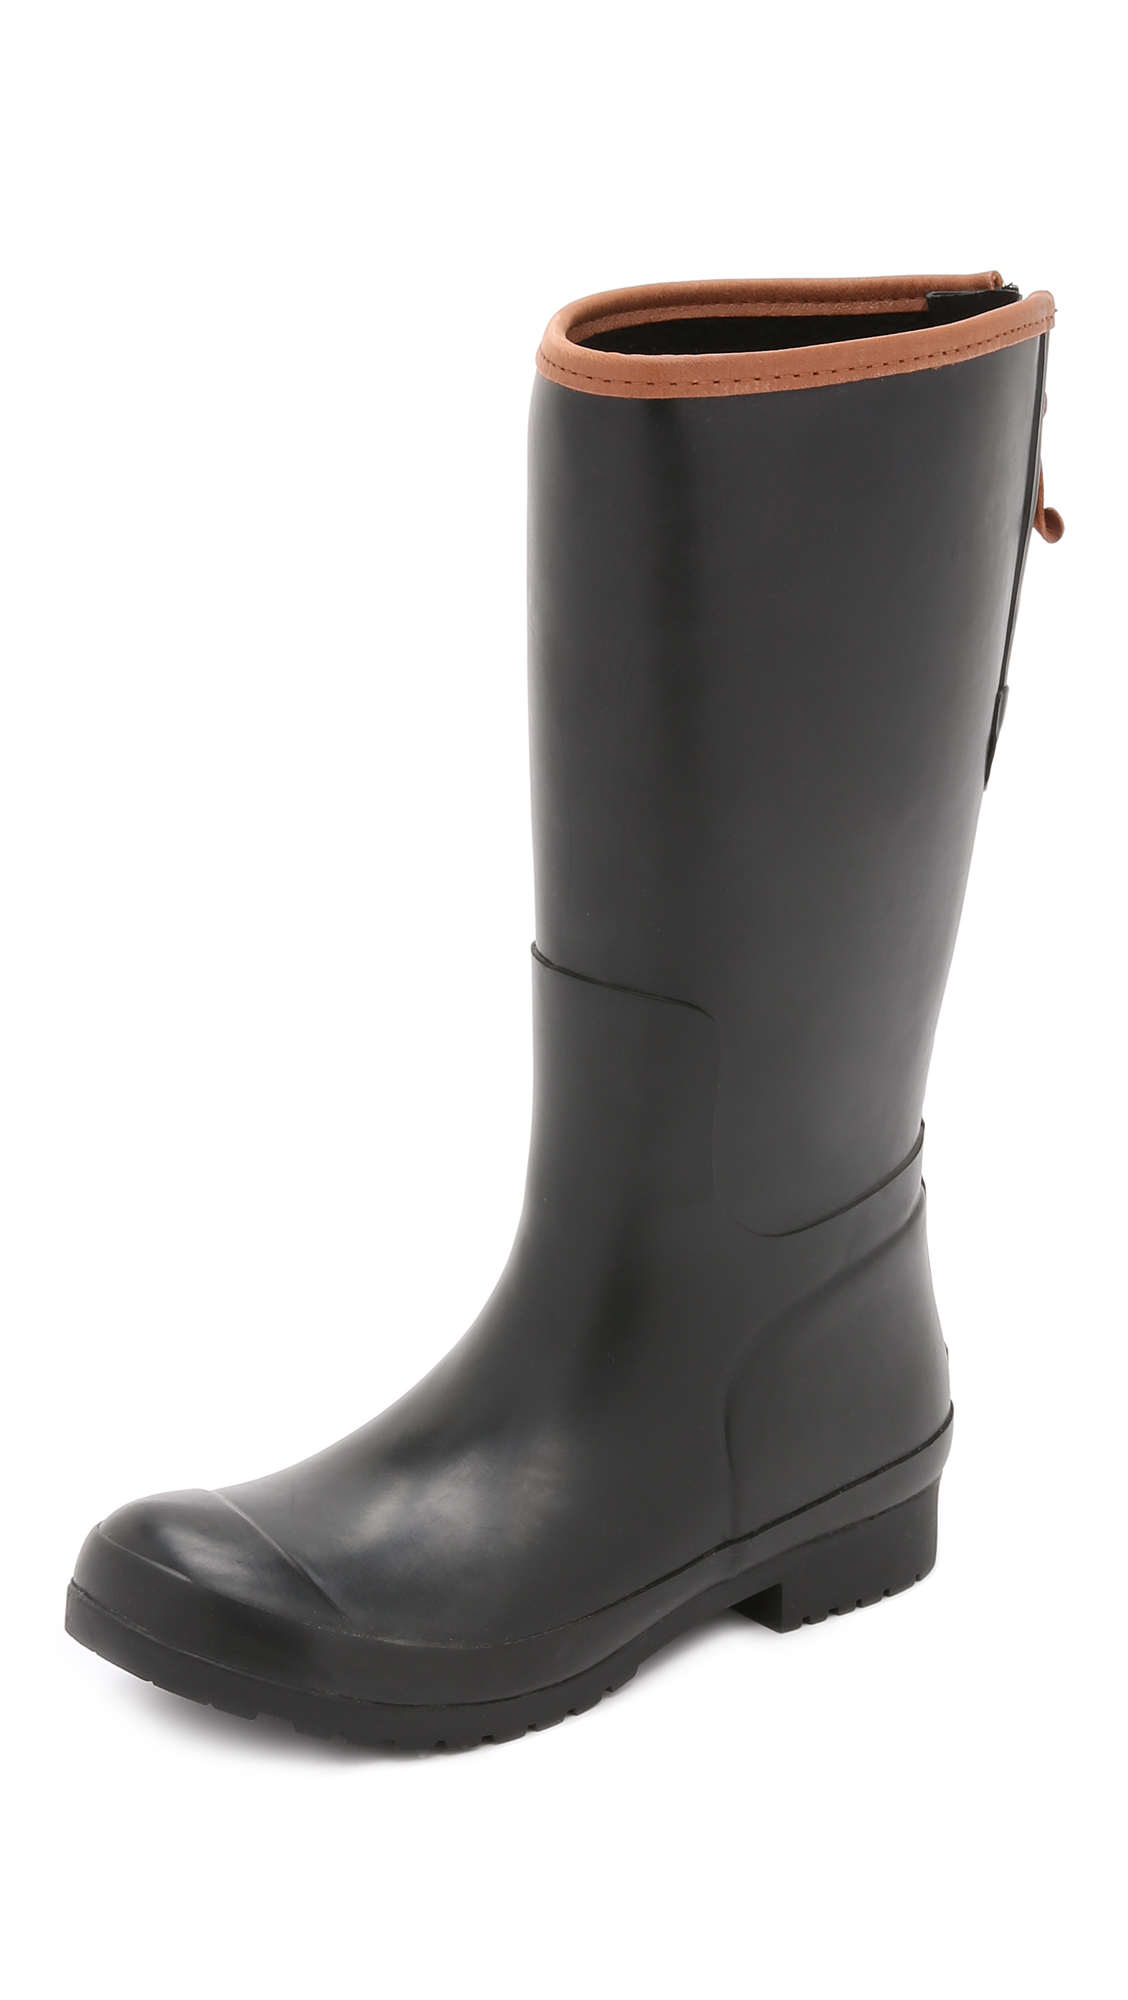 Lyst - Sperry Top-Sider Walker Mist Rain Boots - Black in Black